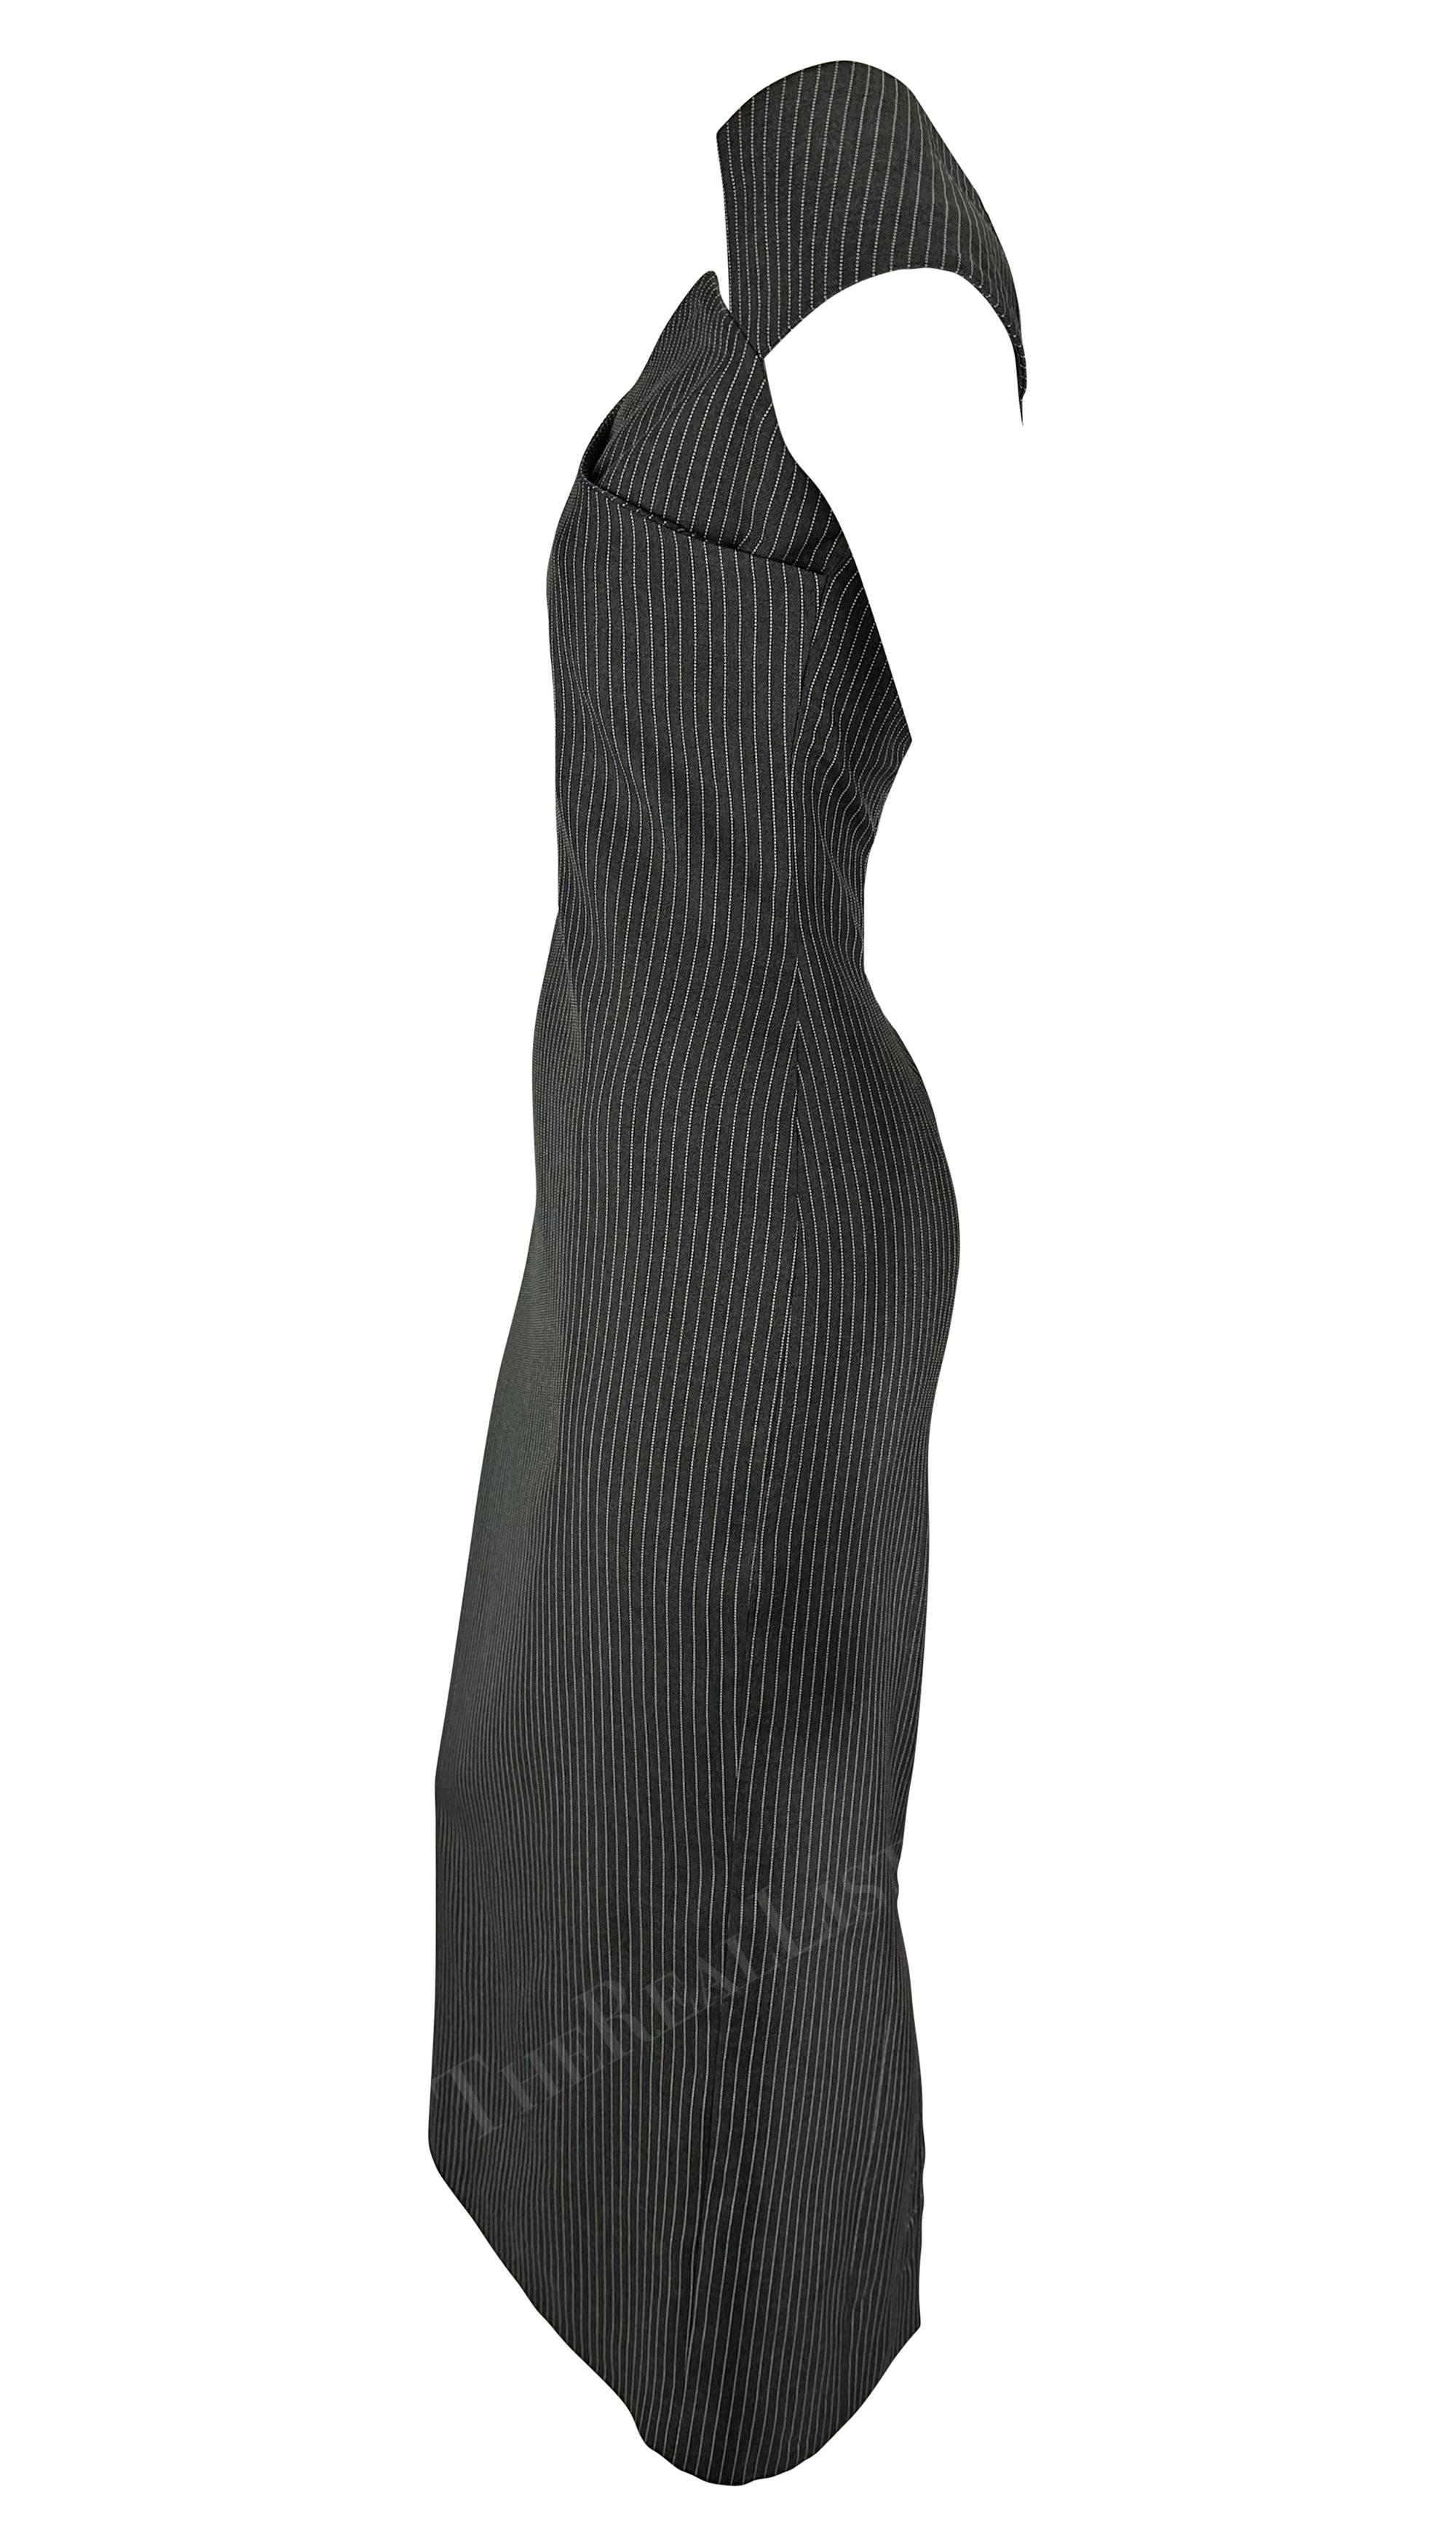 Women's S/S 1996 Gianfranco Ferré Runway Grey Charcoal Pinstripe Off-Shoulder Dress For Sale